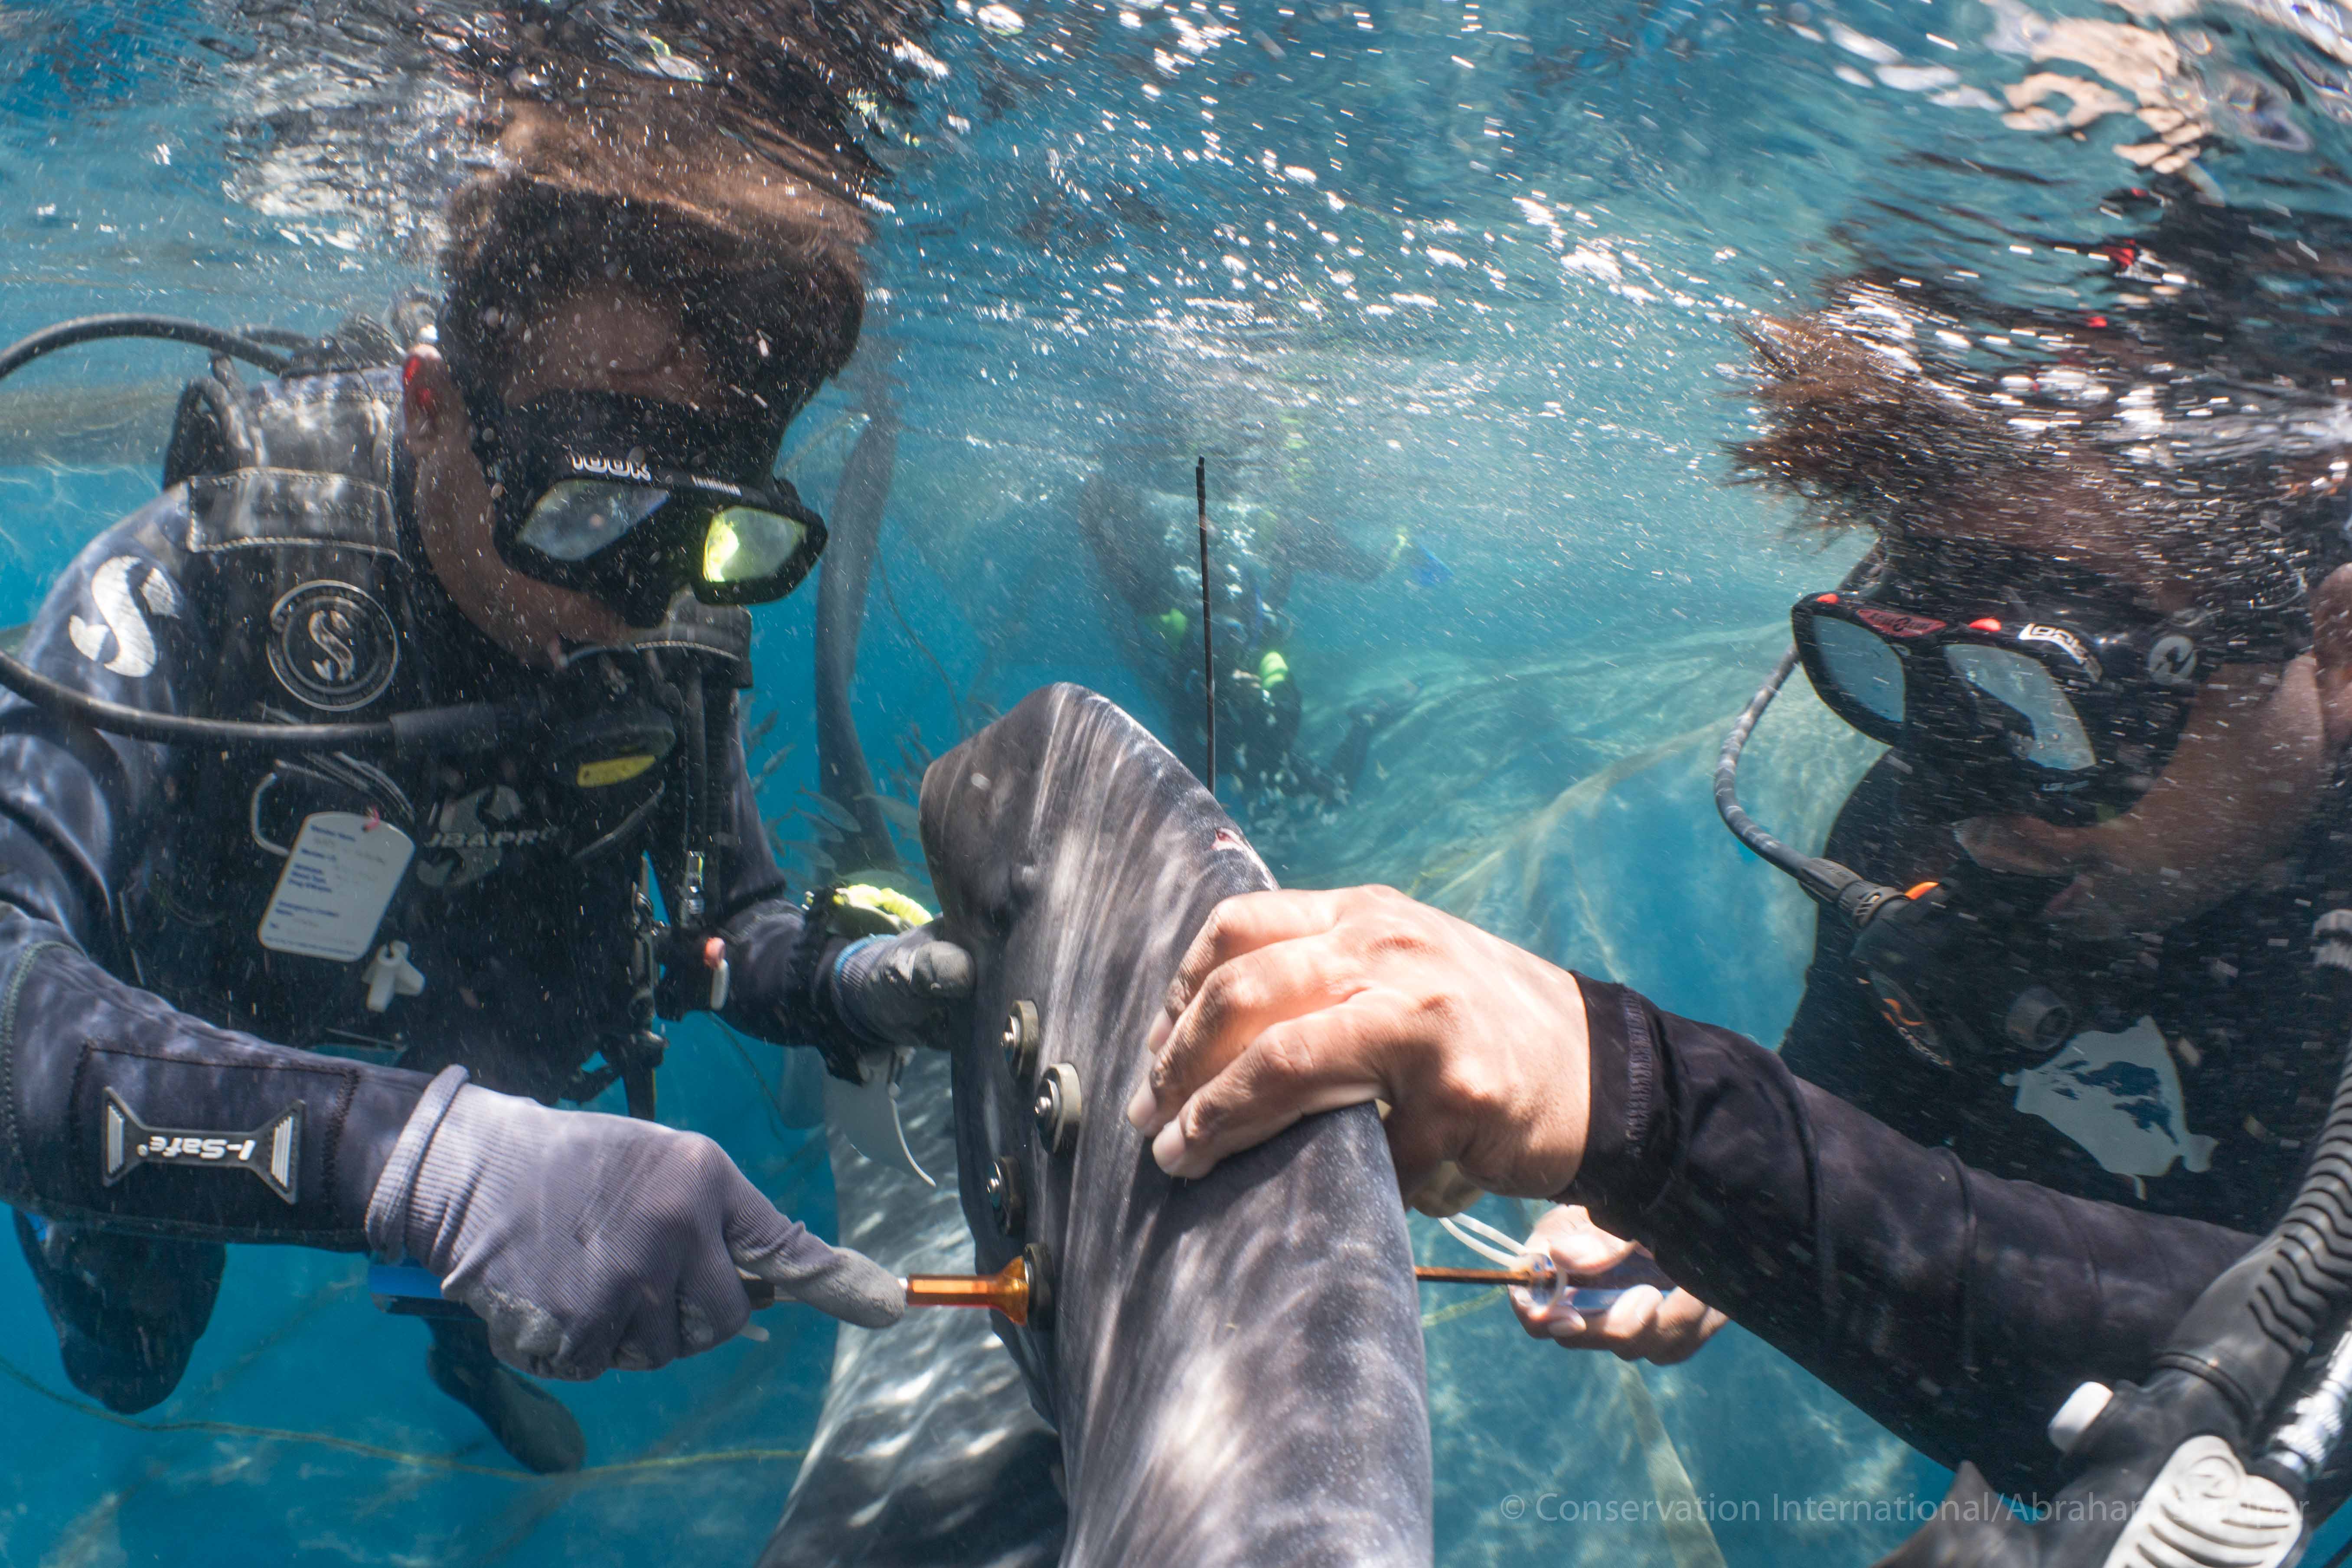 Pemasangan tag satelit di hiu paus | Foto: Abraham Sianipar/Conservation International